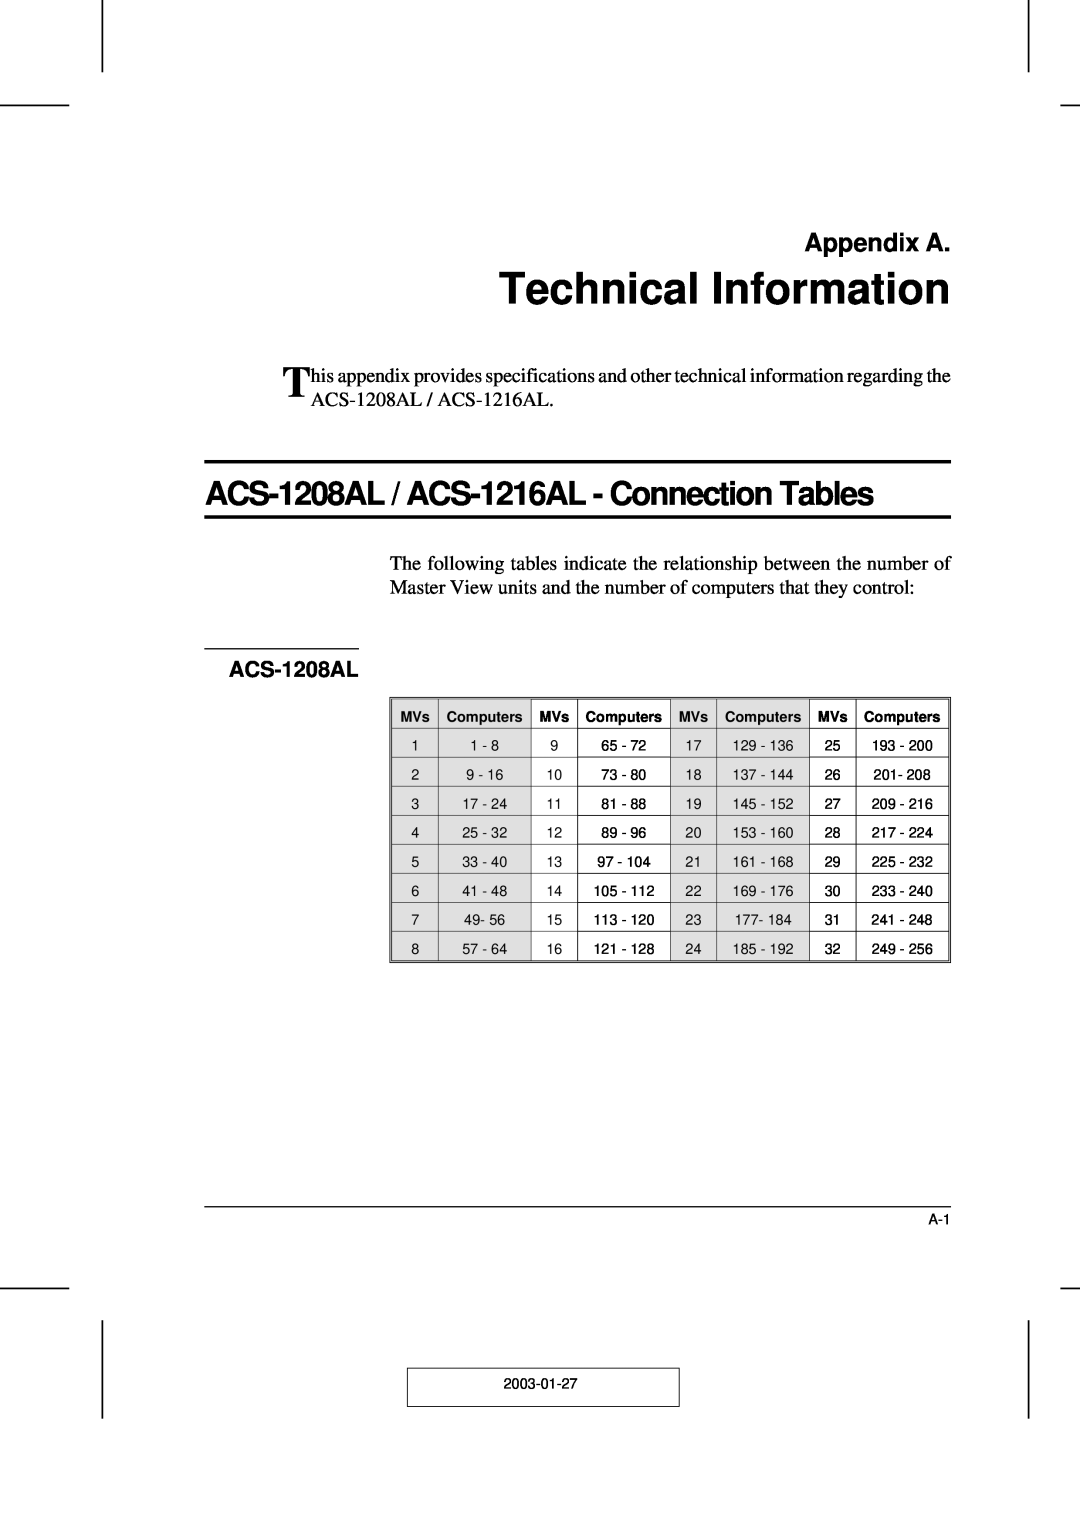 ATEN Technology ACS-1208AL, ACS-1216AL Technical Information, ACS-1208AL / ACS-1216AL- Connection Tables, Appendix A 